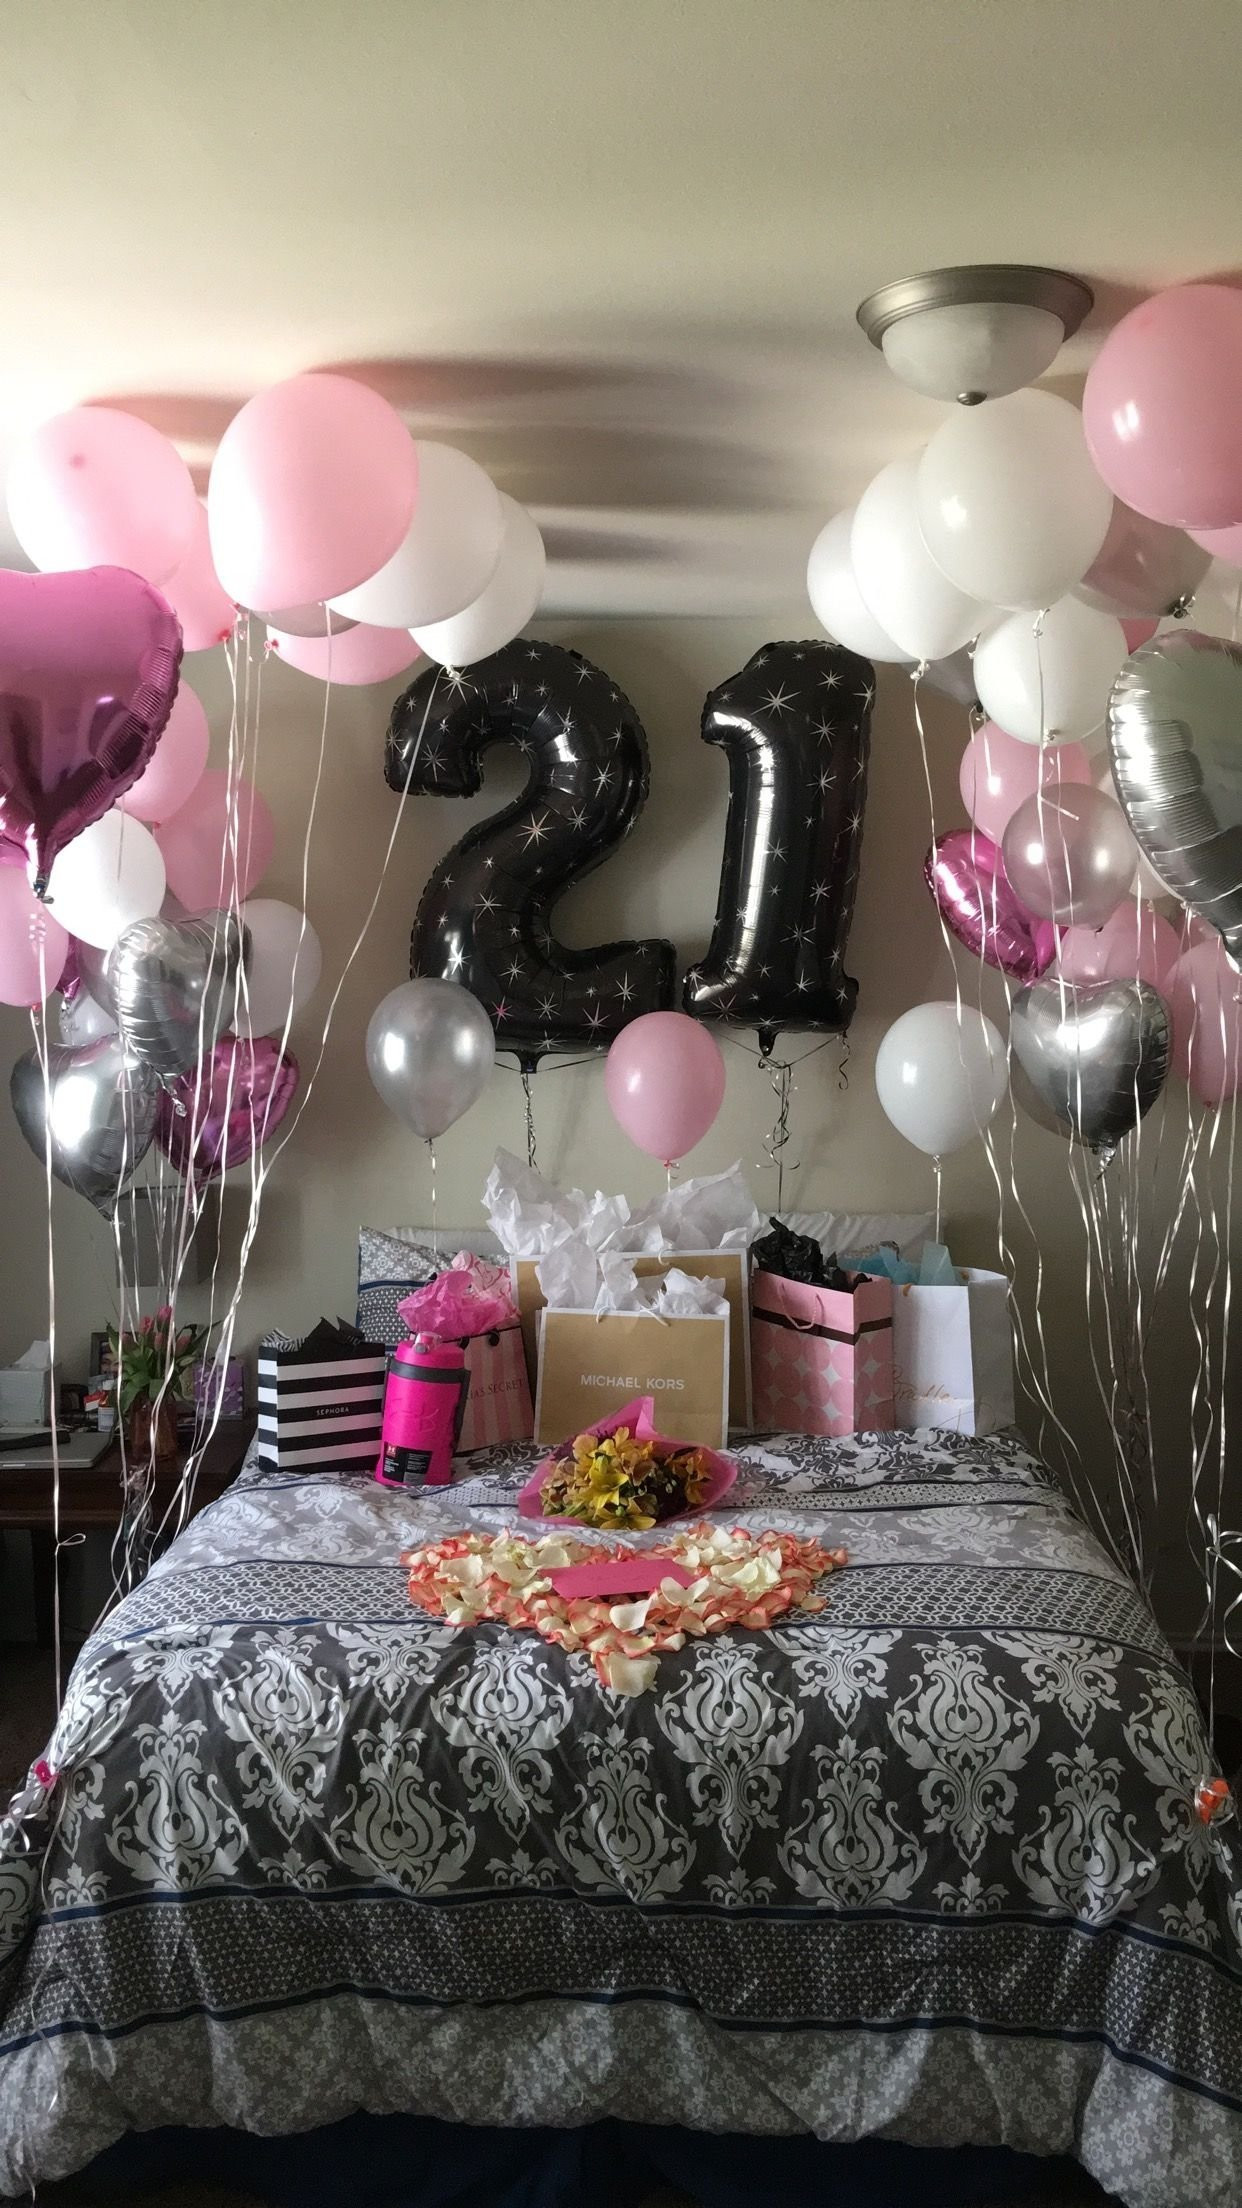 Girlfriend Bday Gift Ideas
 10 Fashionable Birthday Surprise Ideas For Girlfriend 2020